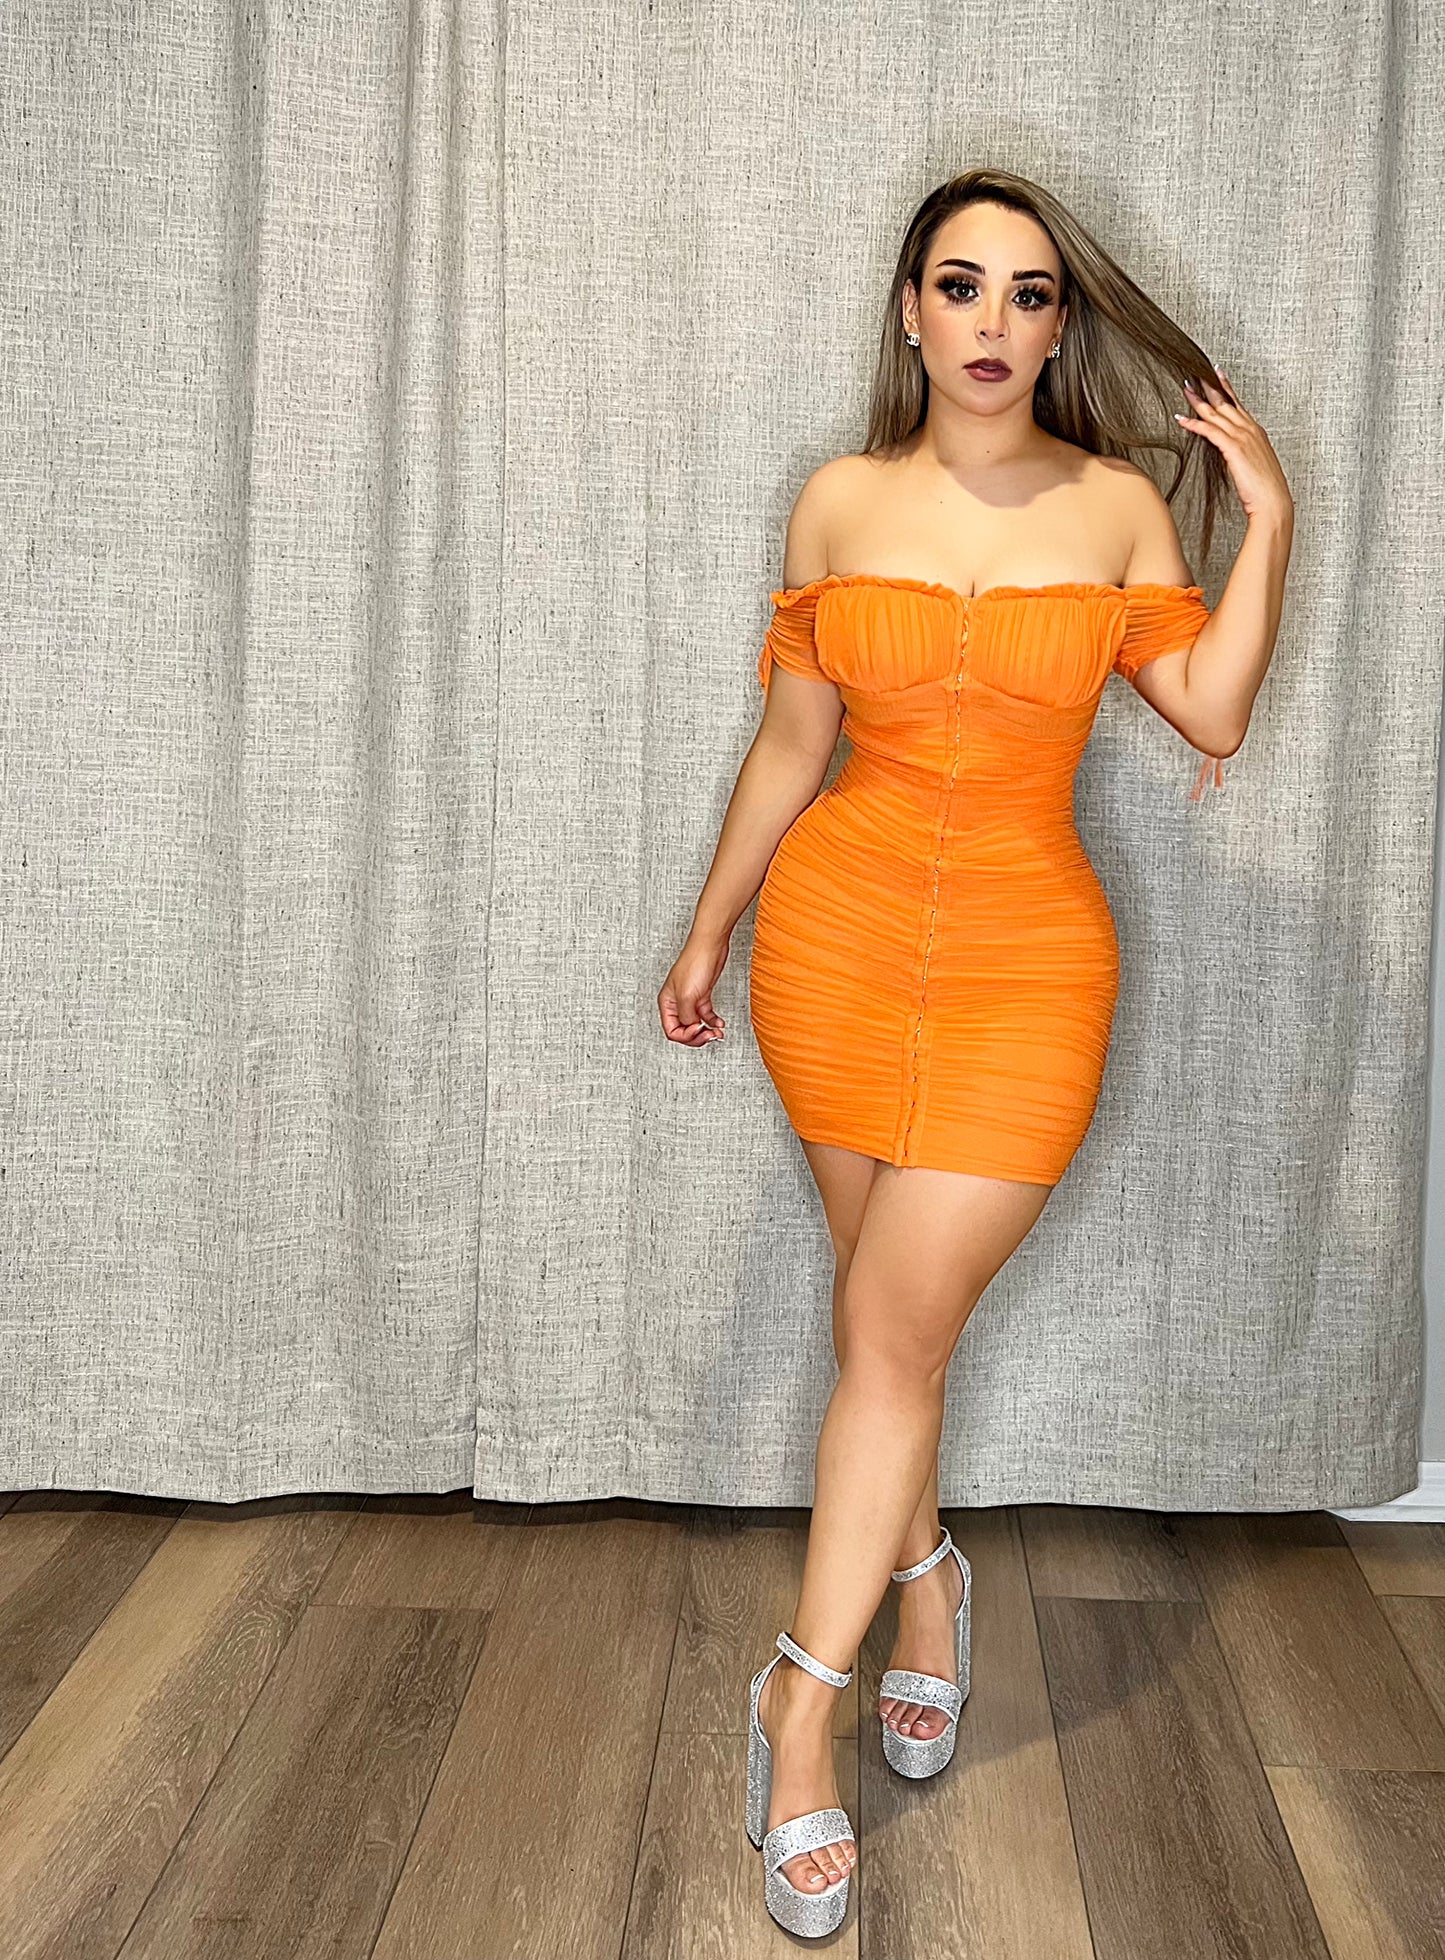 Vestido naranja corset – selfie boutique